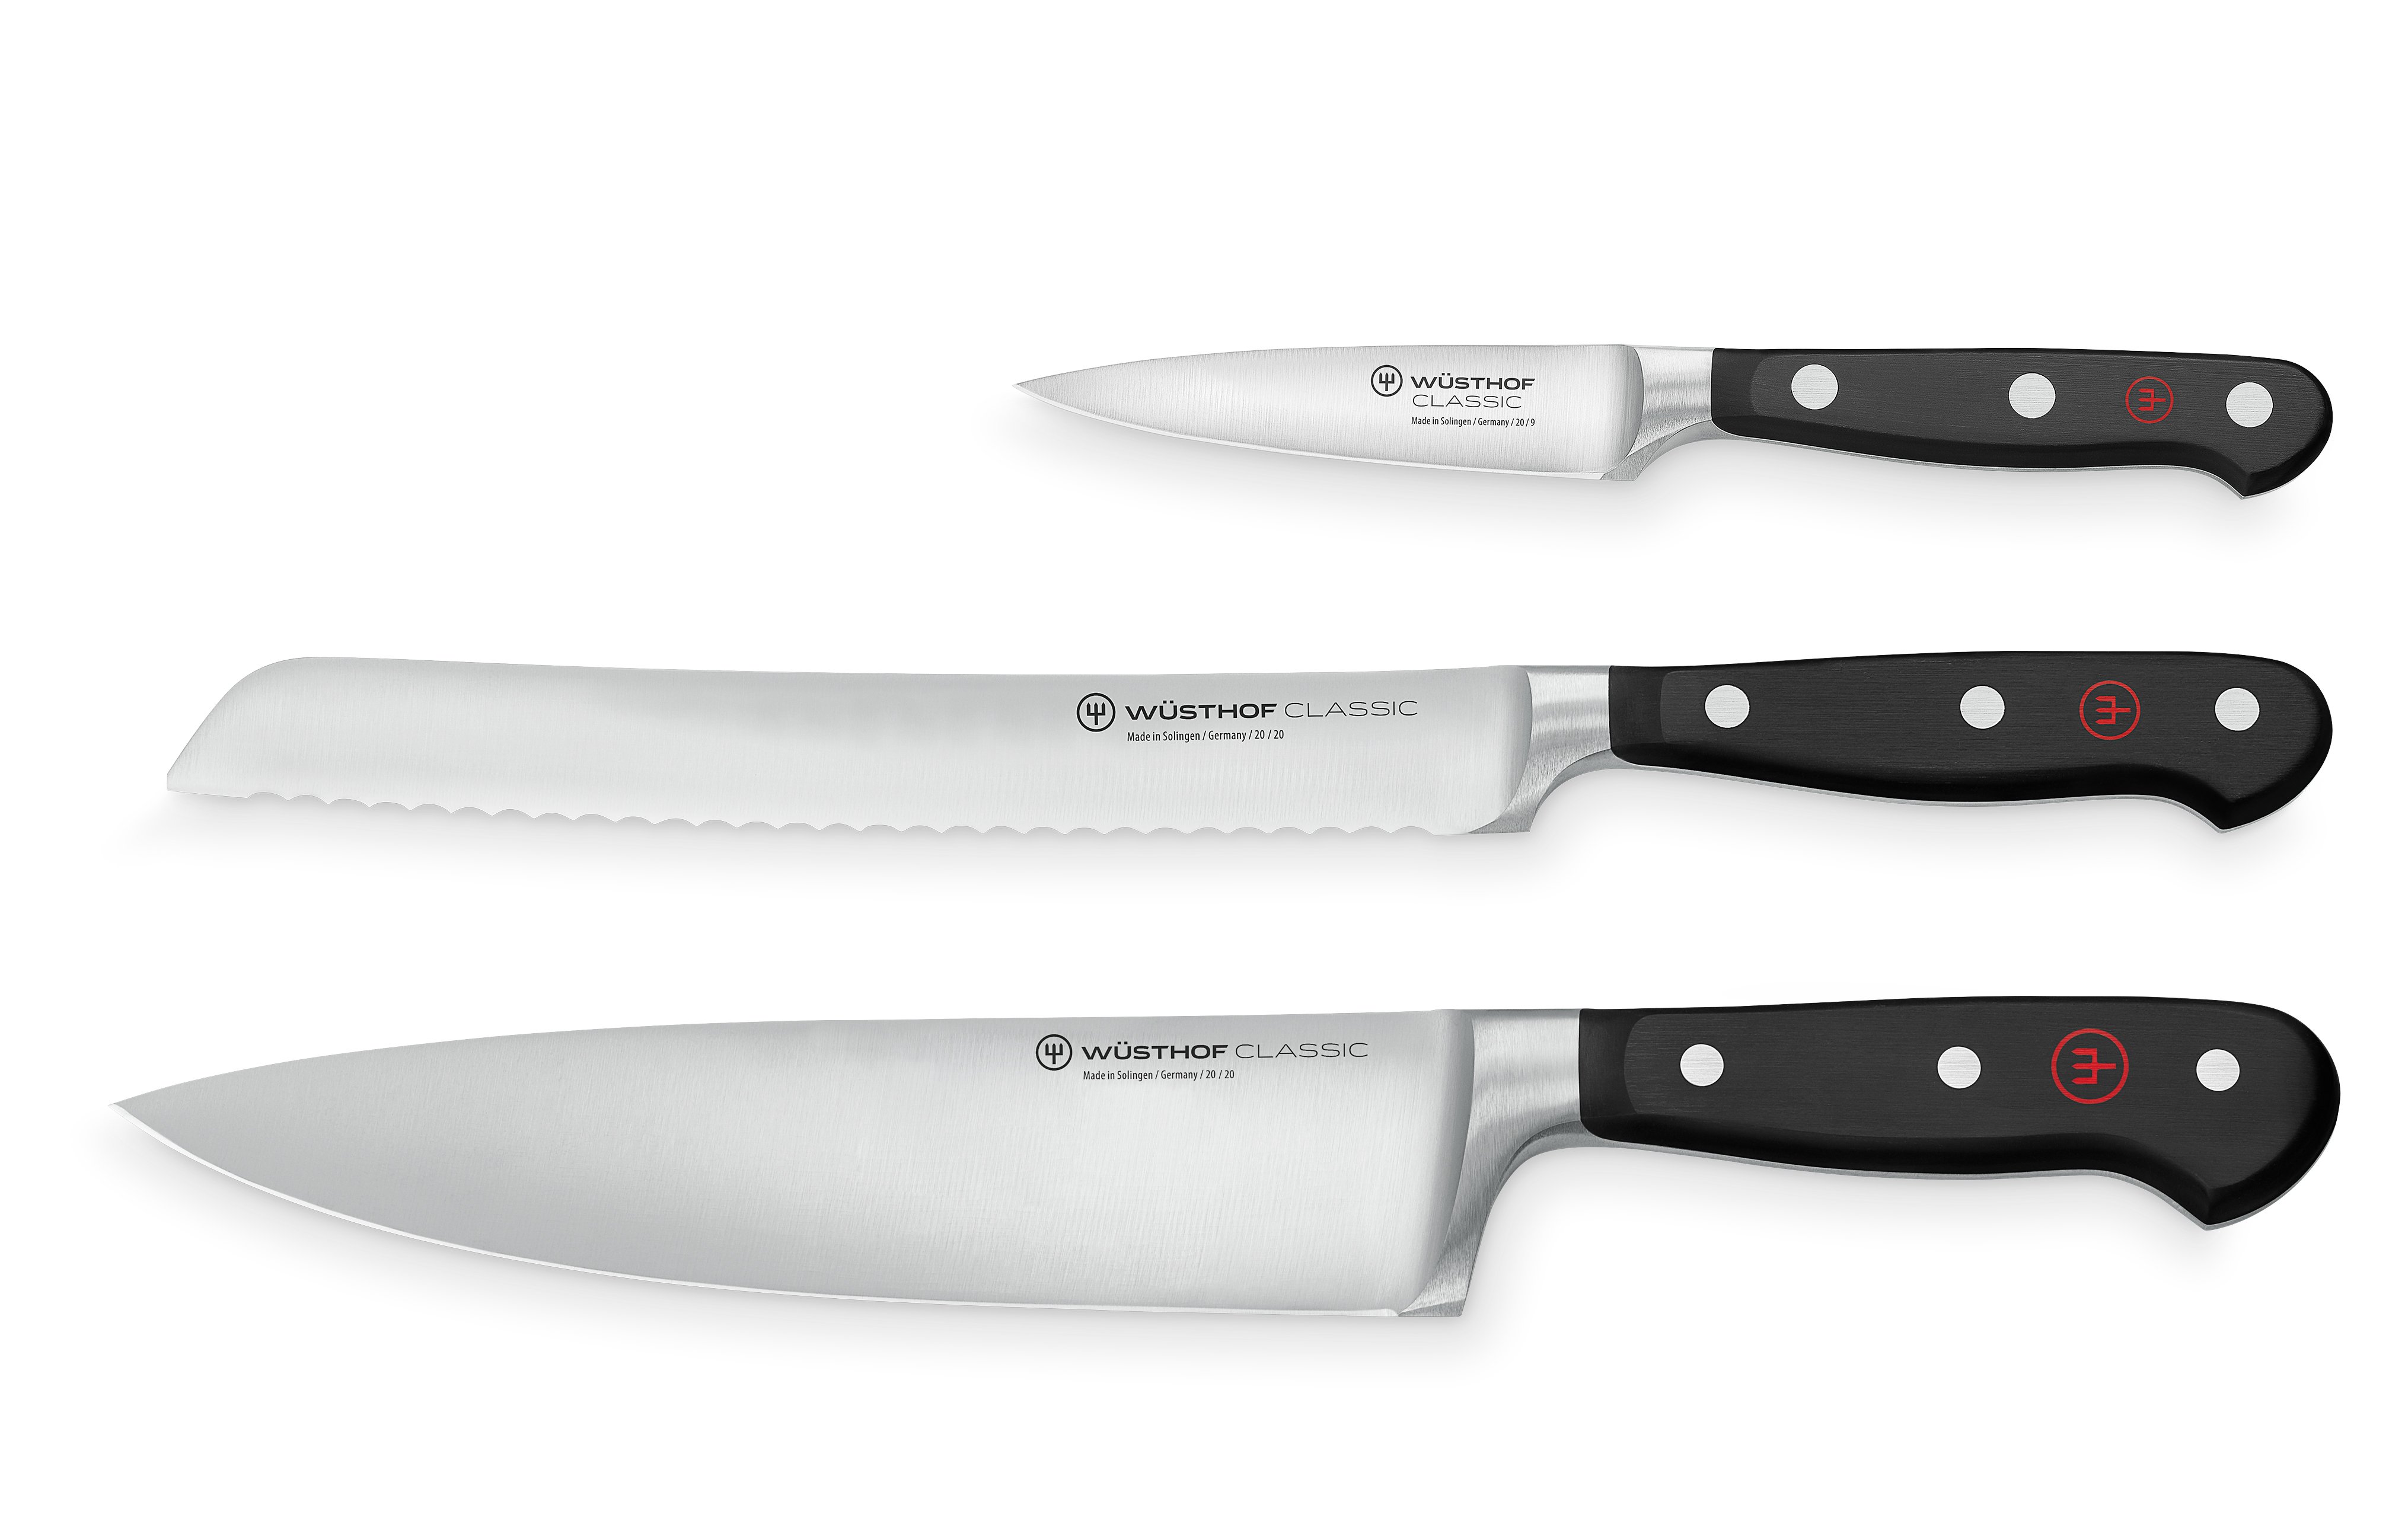 Messer Set mit 3 Messern / Knife set with 3 knives